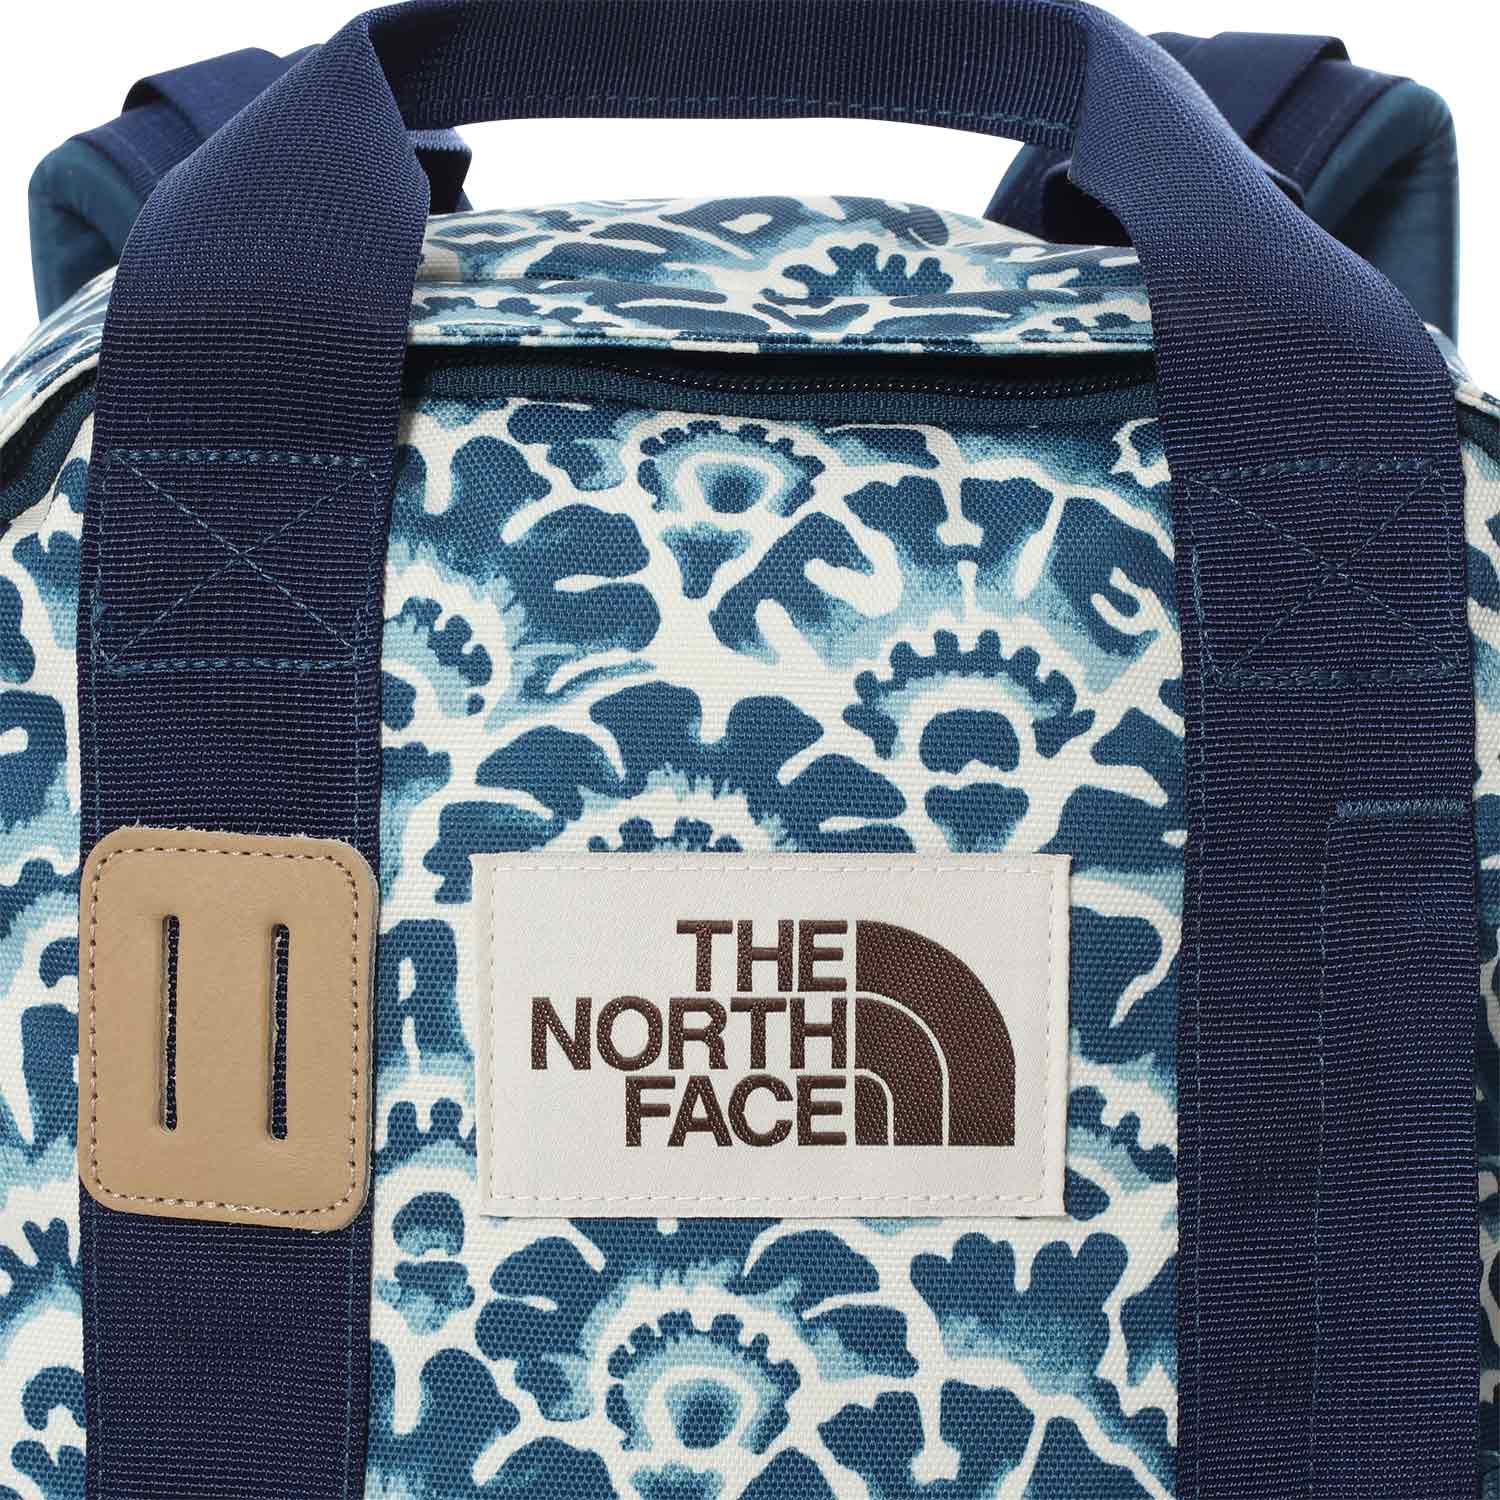 The North Face Rucksack Tote Pack MontereyBlueAshburyFlo